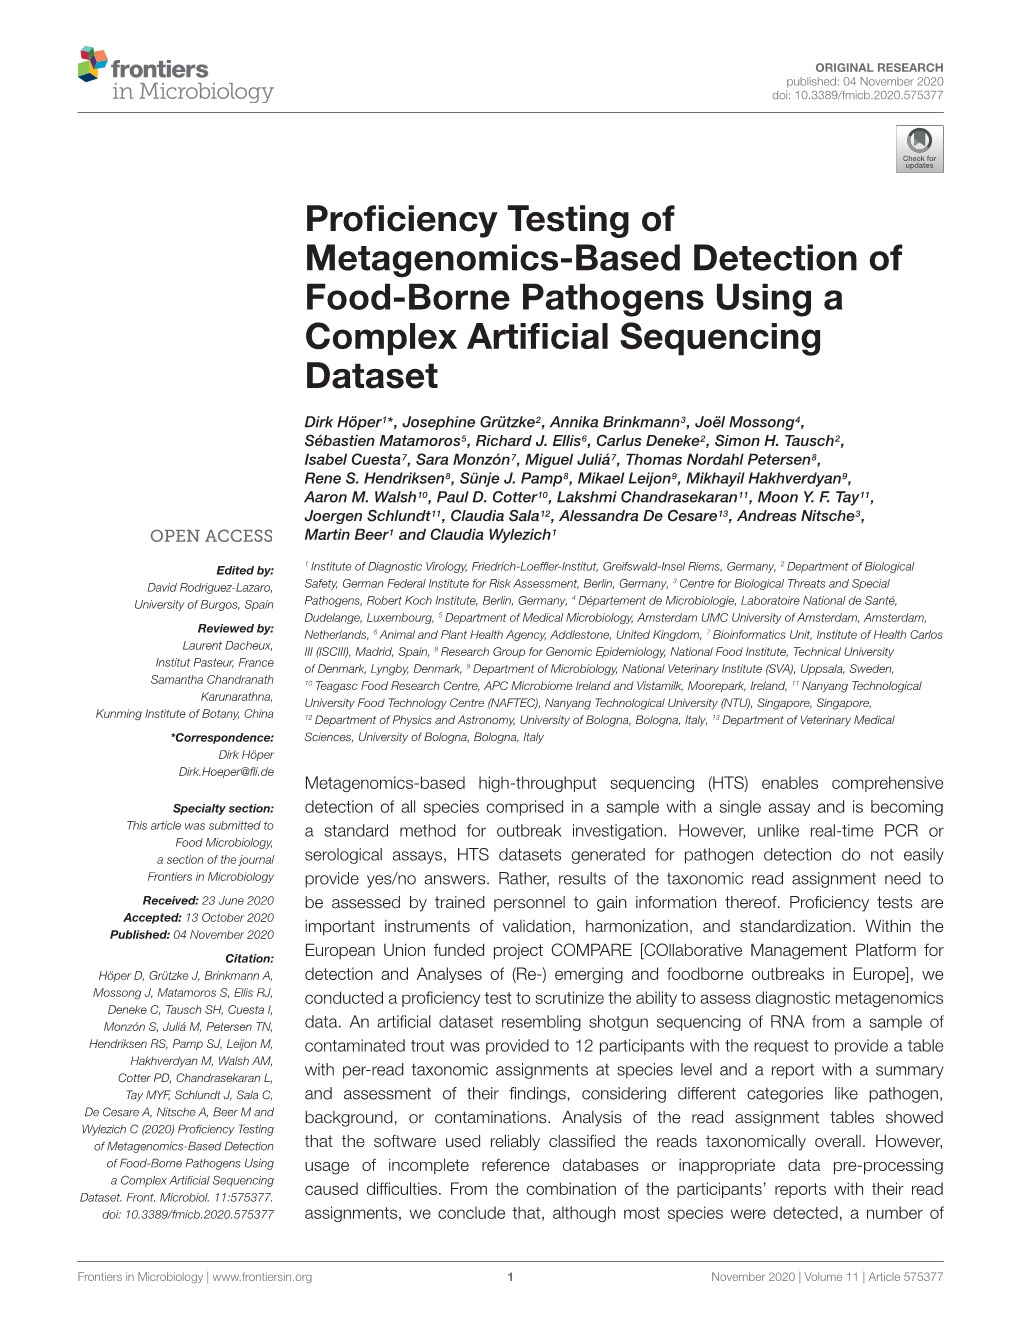 Proficiency Testing of Metagenomics-Based